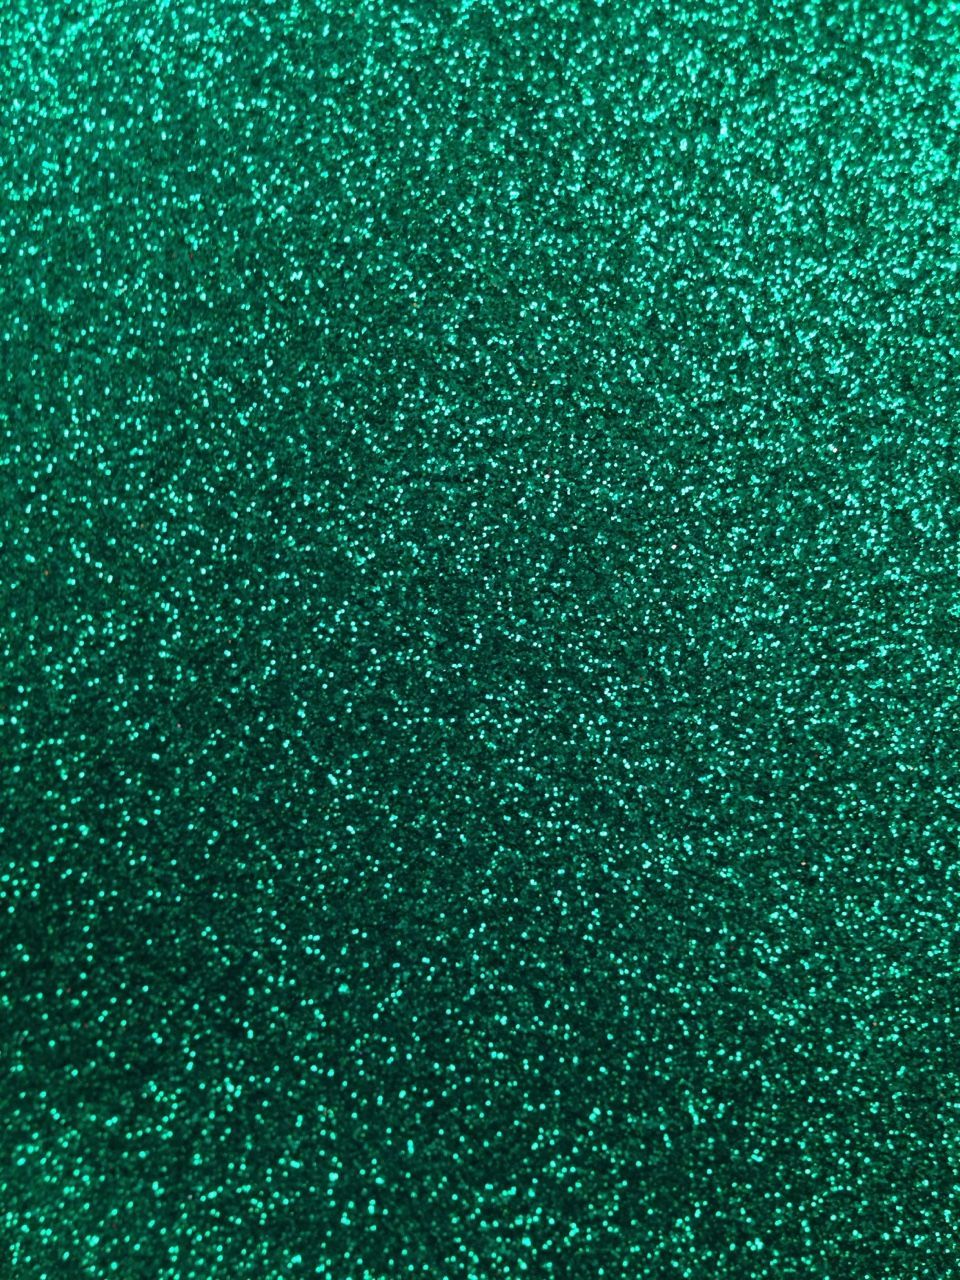 Restore emerald' style leaves wallpaper - TenStickers